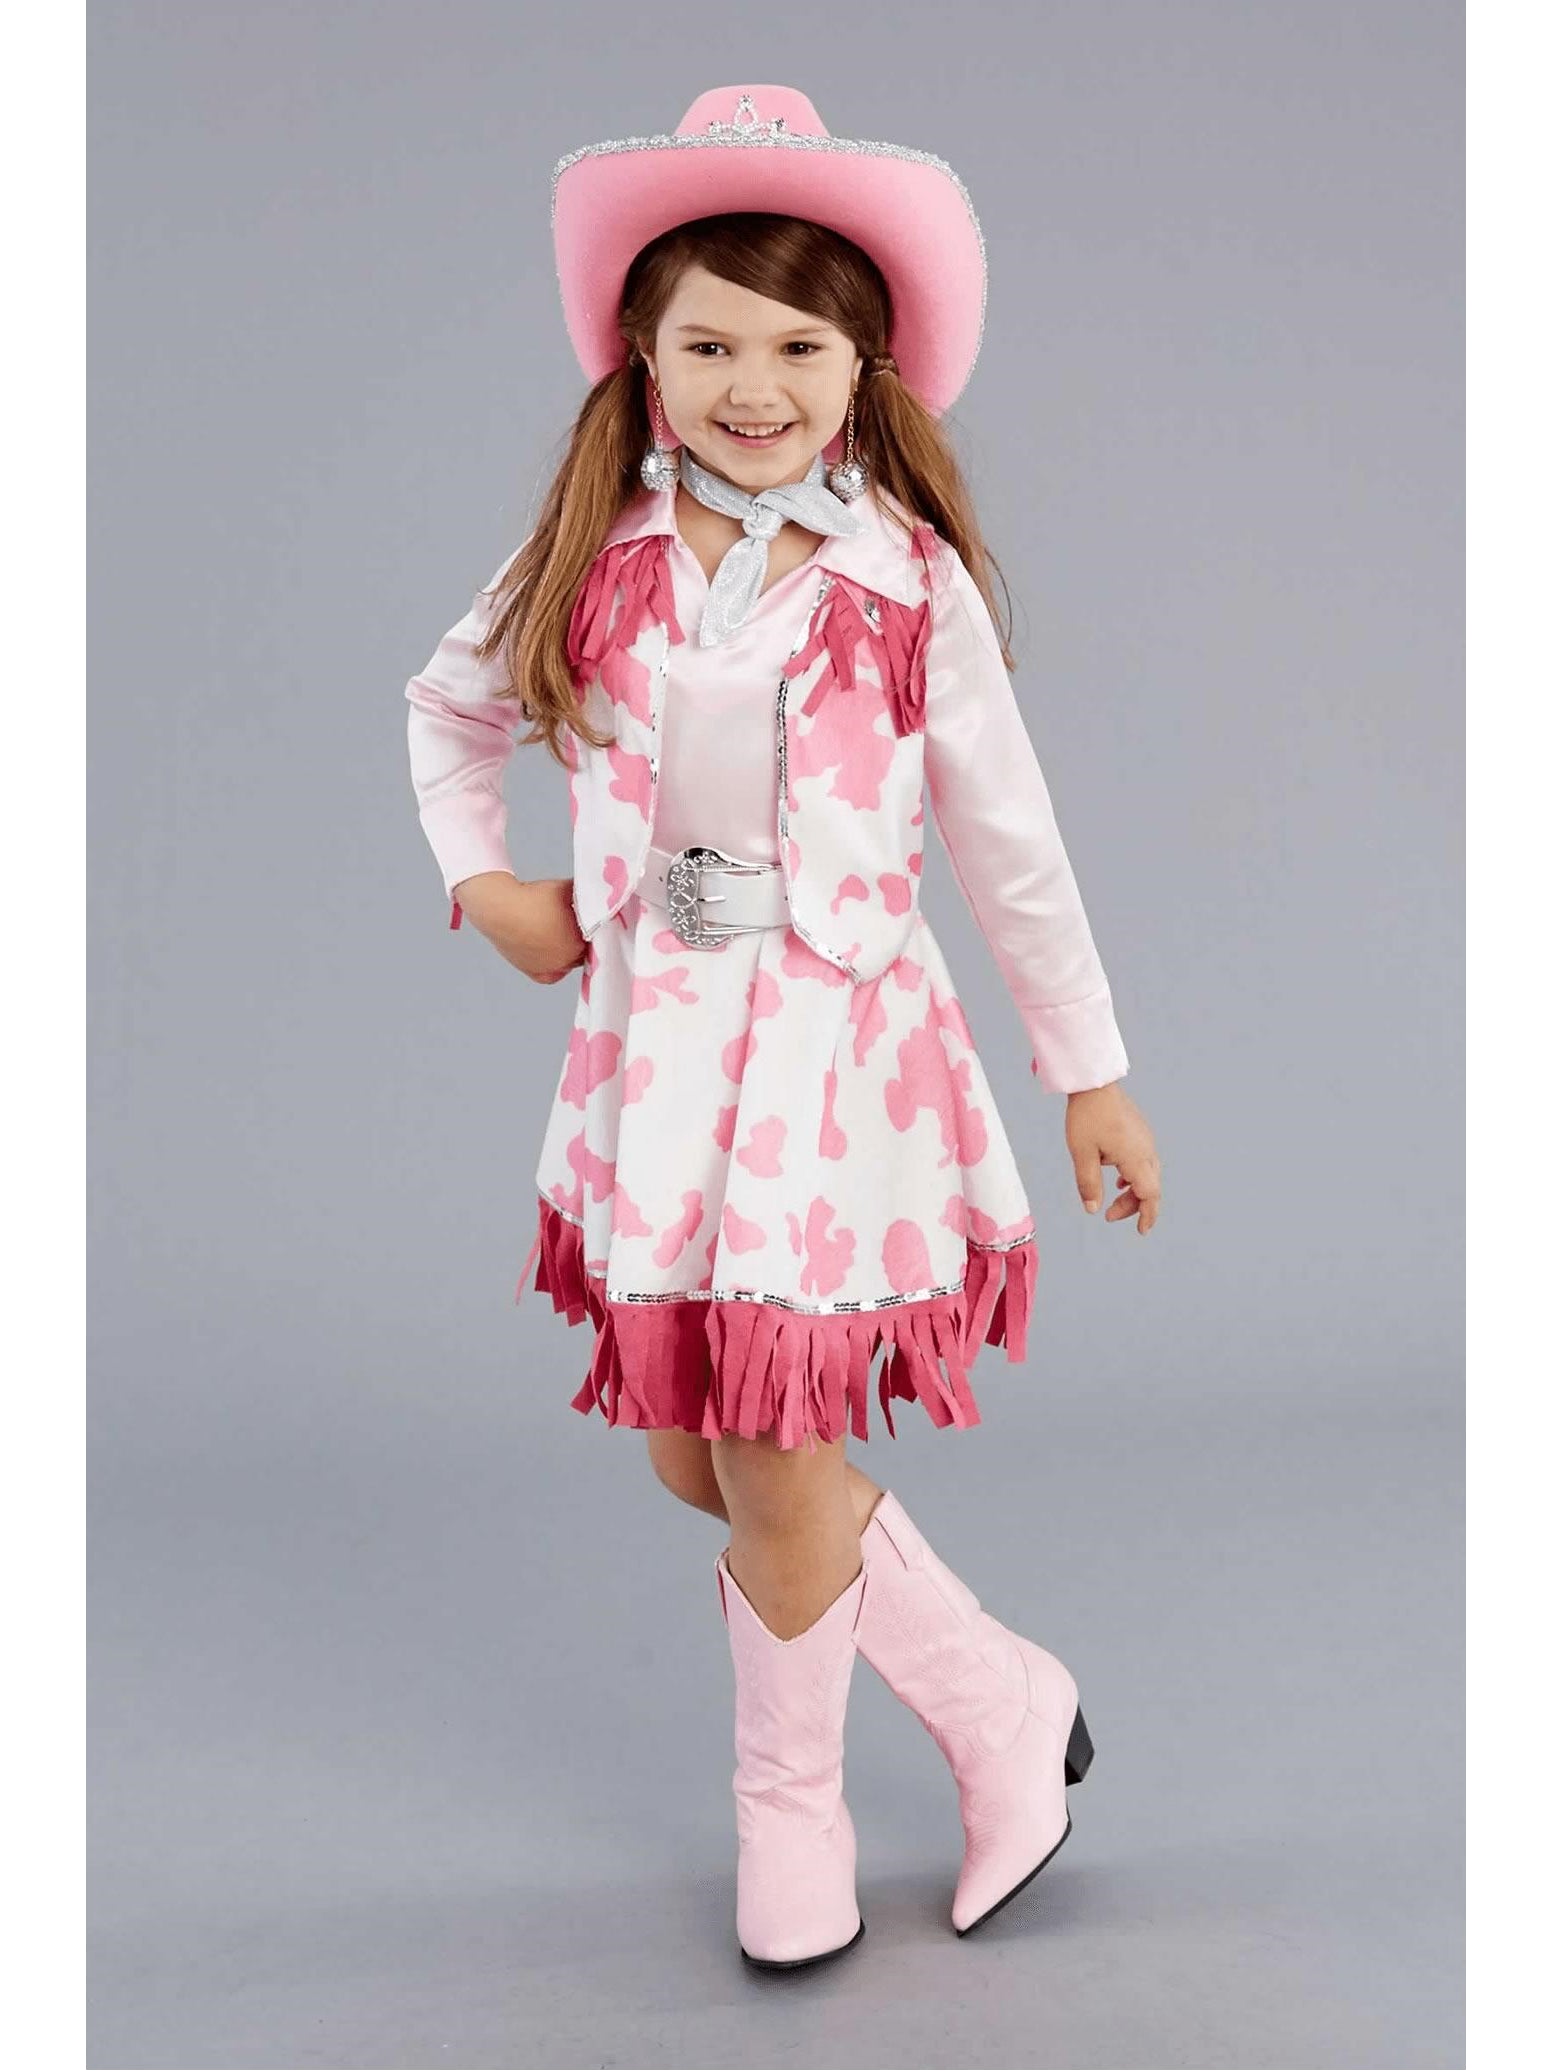 cowgirl costume girl